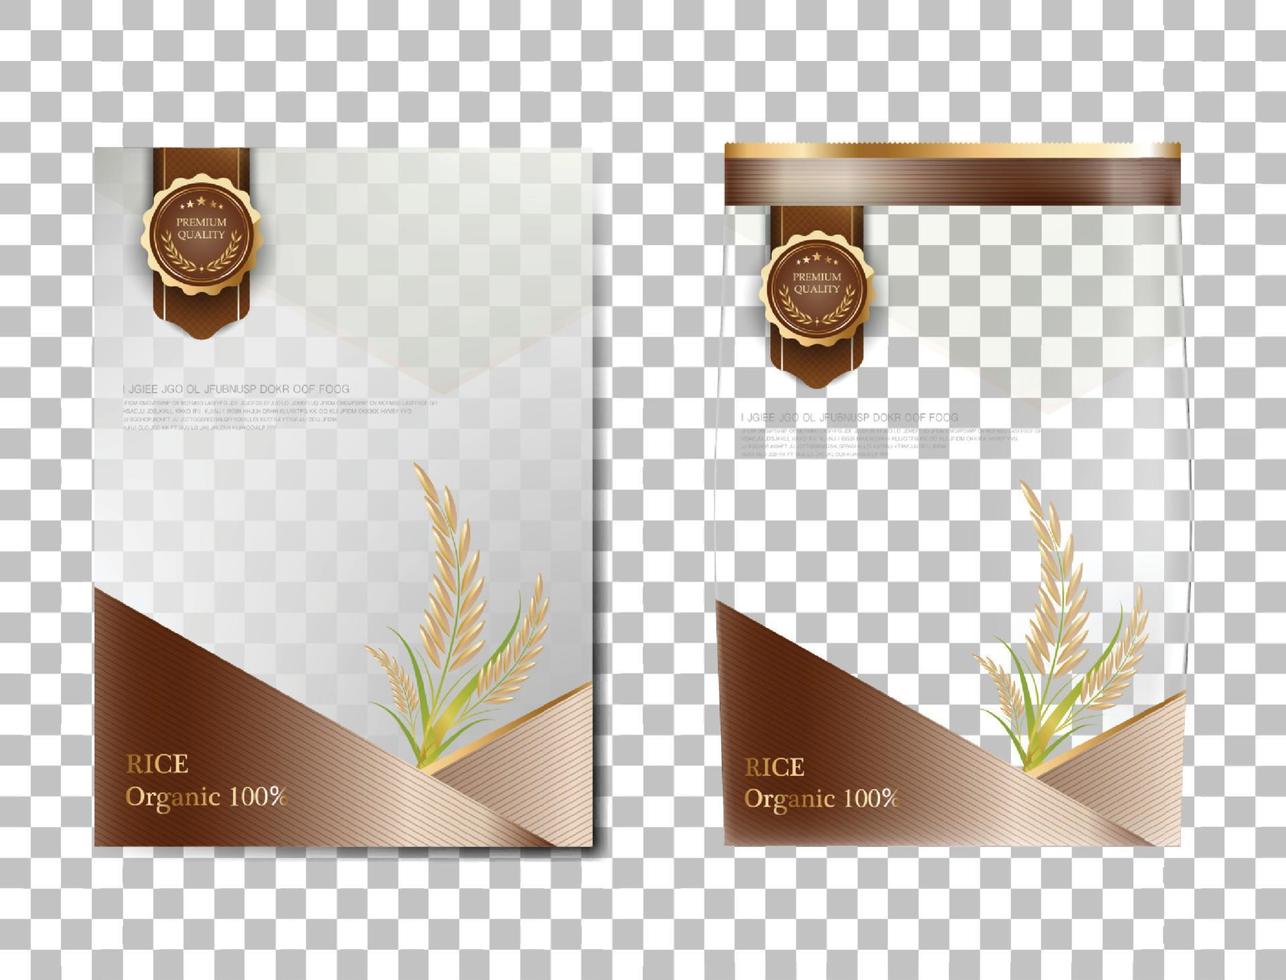 ris paket thailand livsmedelsprodukter, brunt guld banner och affisch mall vektor design ris.